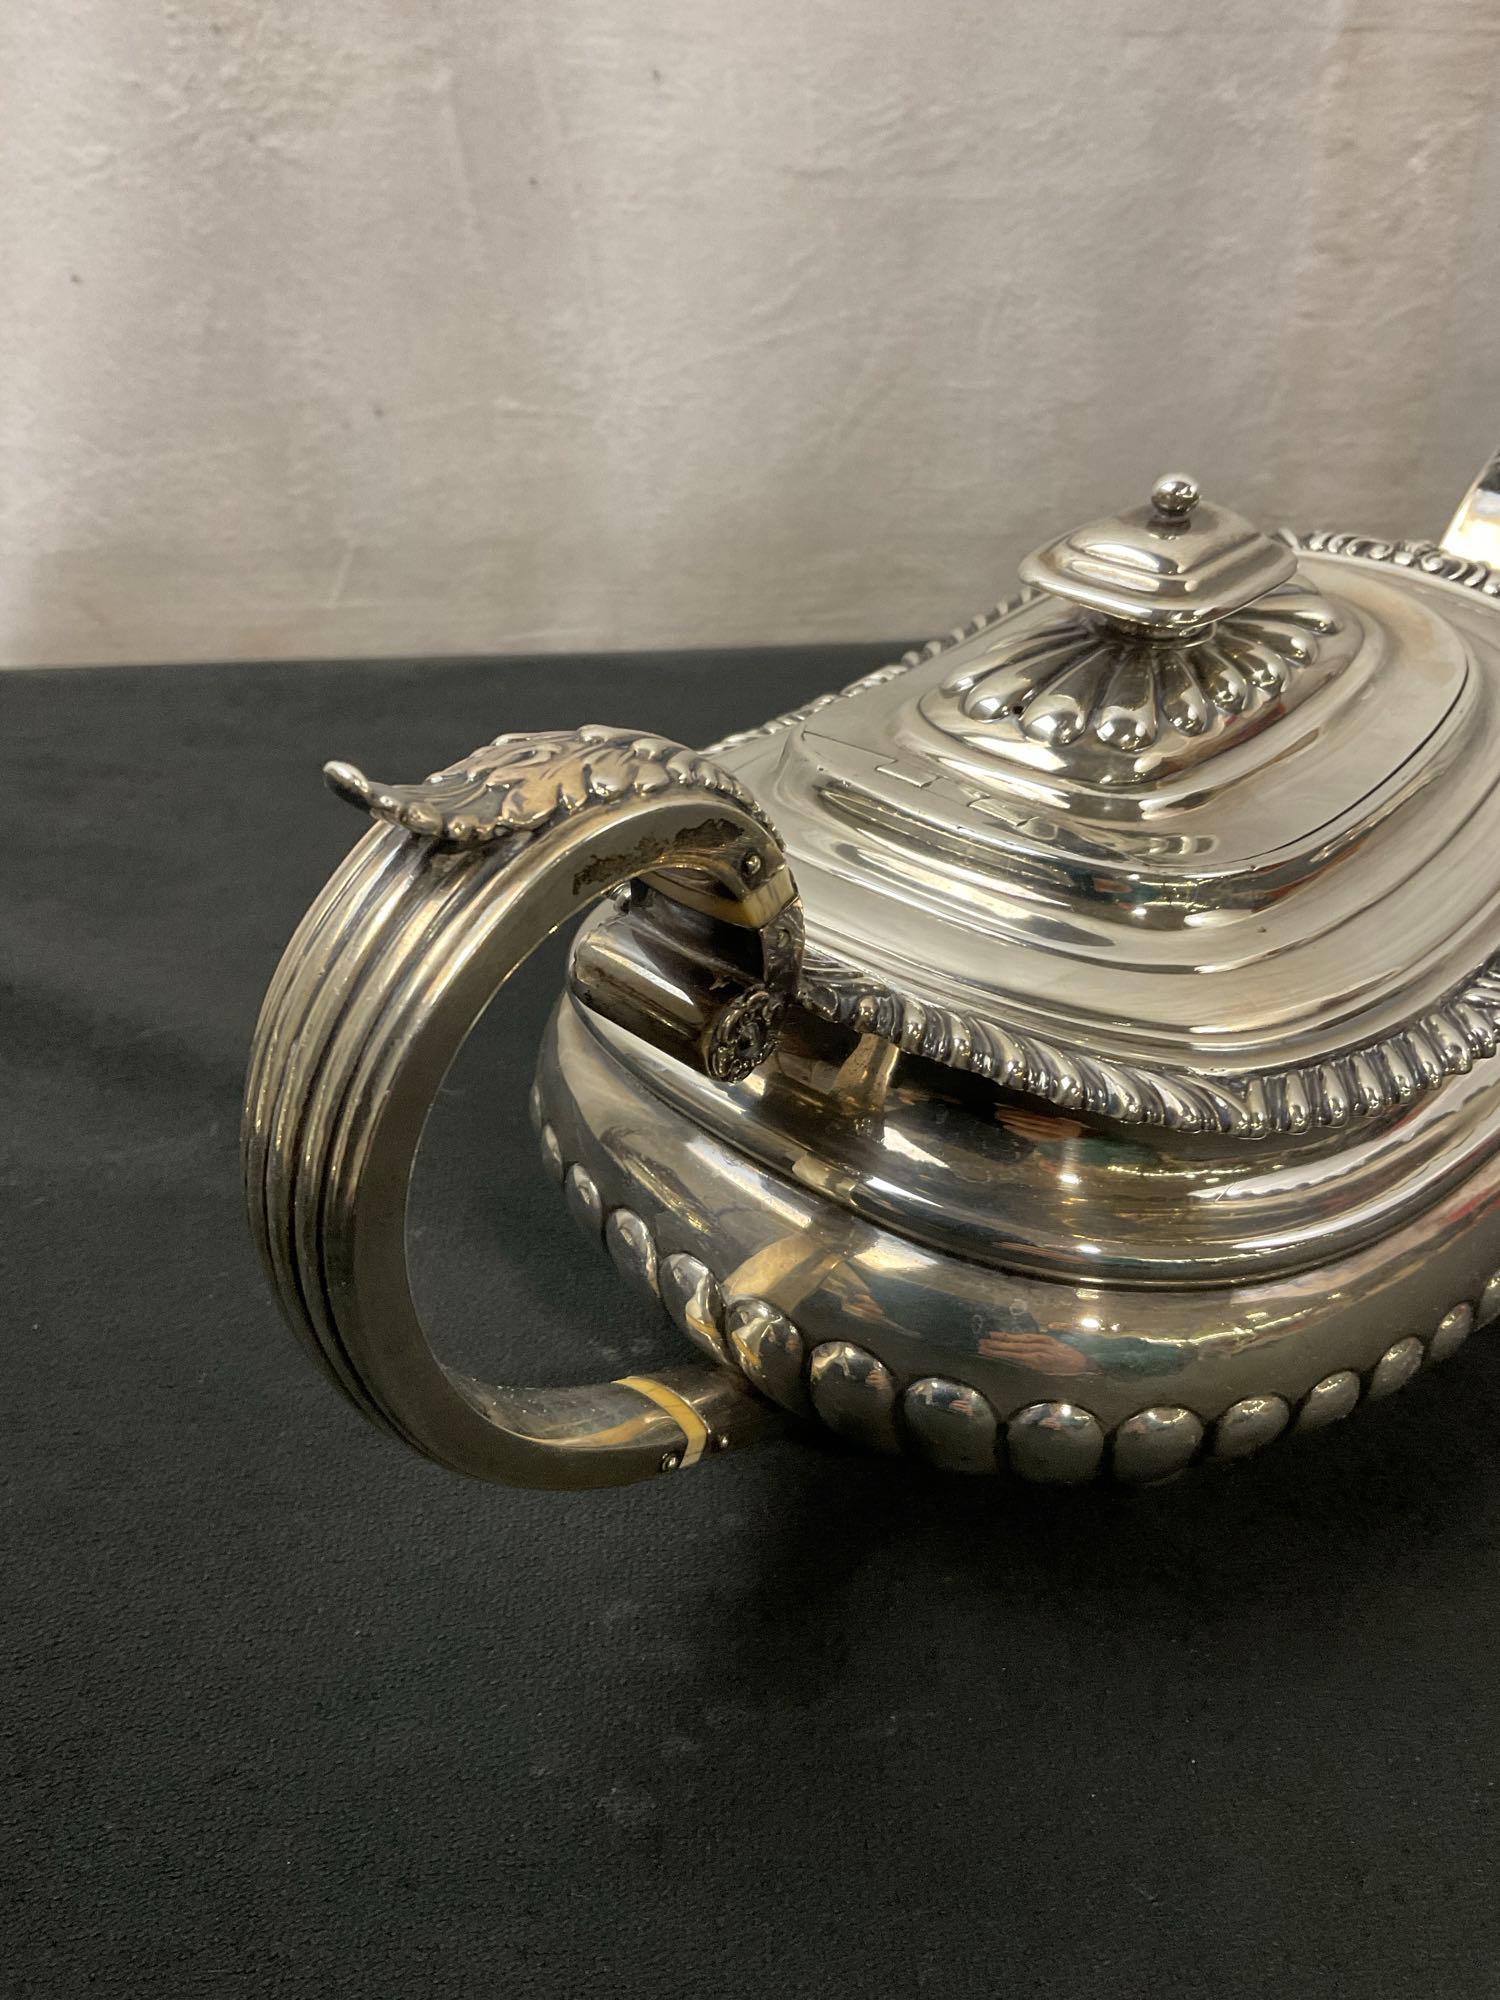 JM & Co Antique 1818 Edinburgh Sterling Silver Tea Set, Hollowware, 3 piece set, 1270g total weight